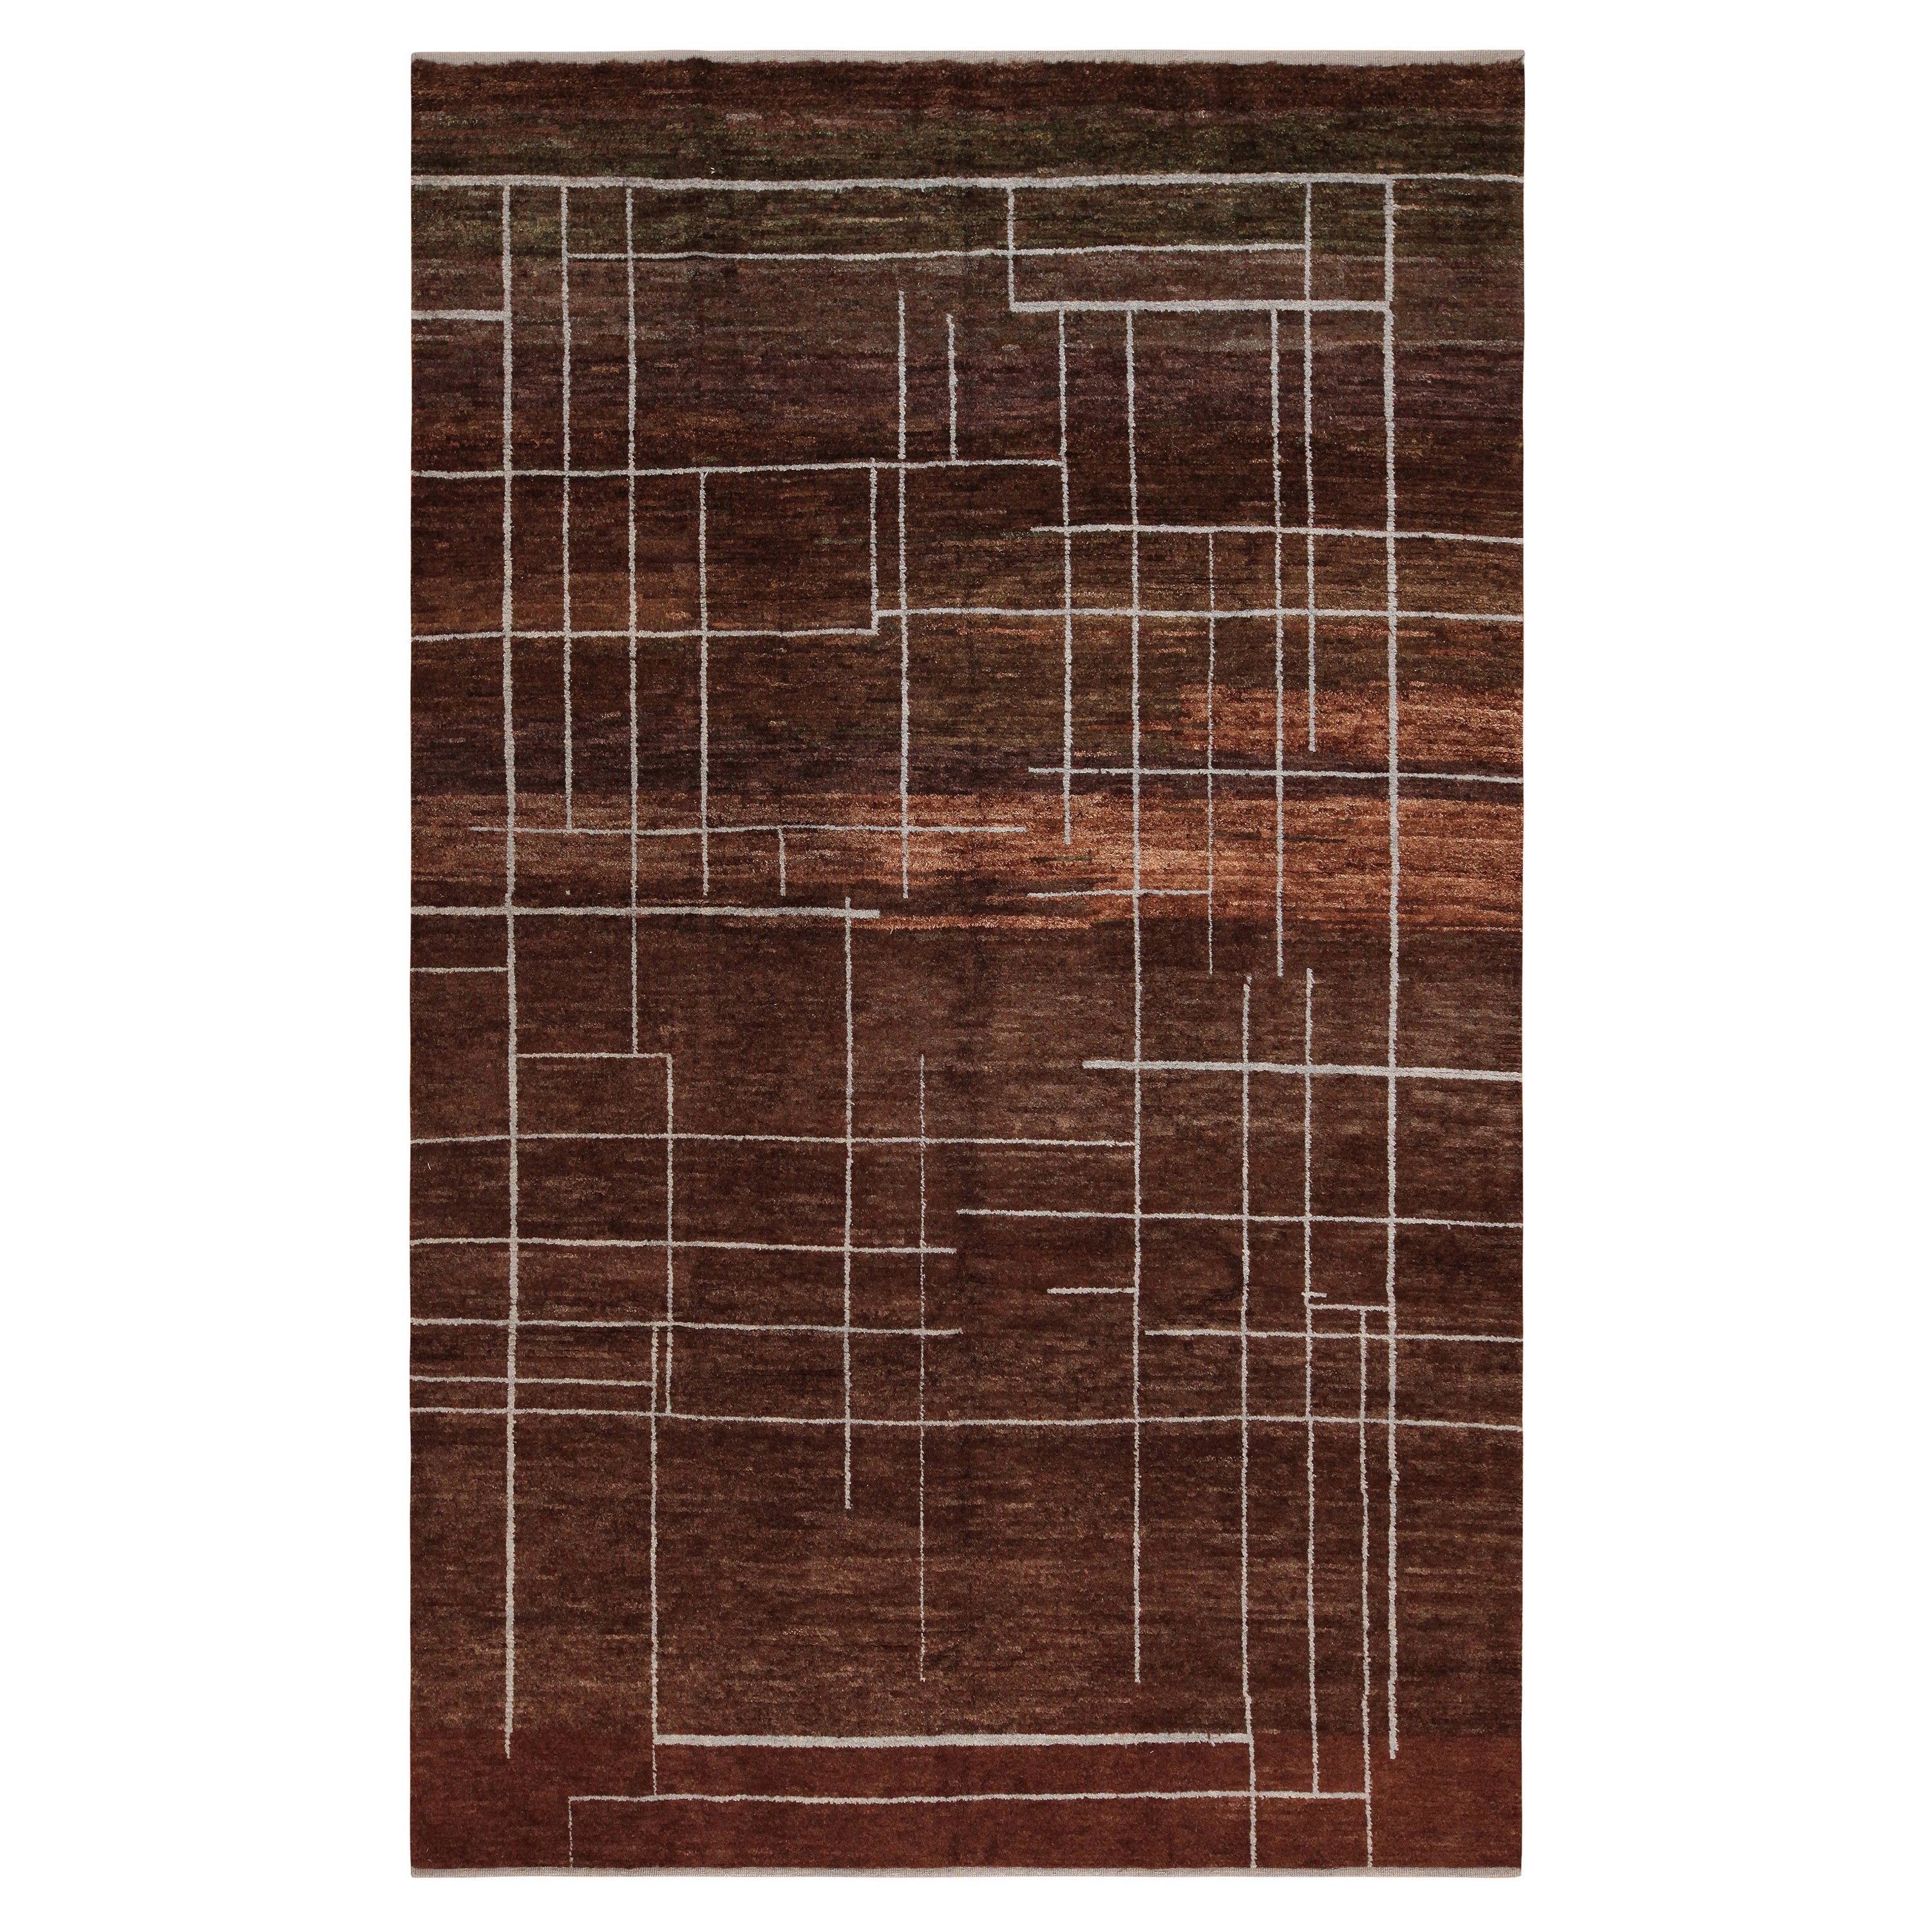 Tapis de la collection Nazmiyal, design géométrique transitionnel moderne, 7'2" x 11'4" en vente